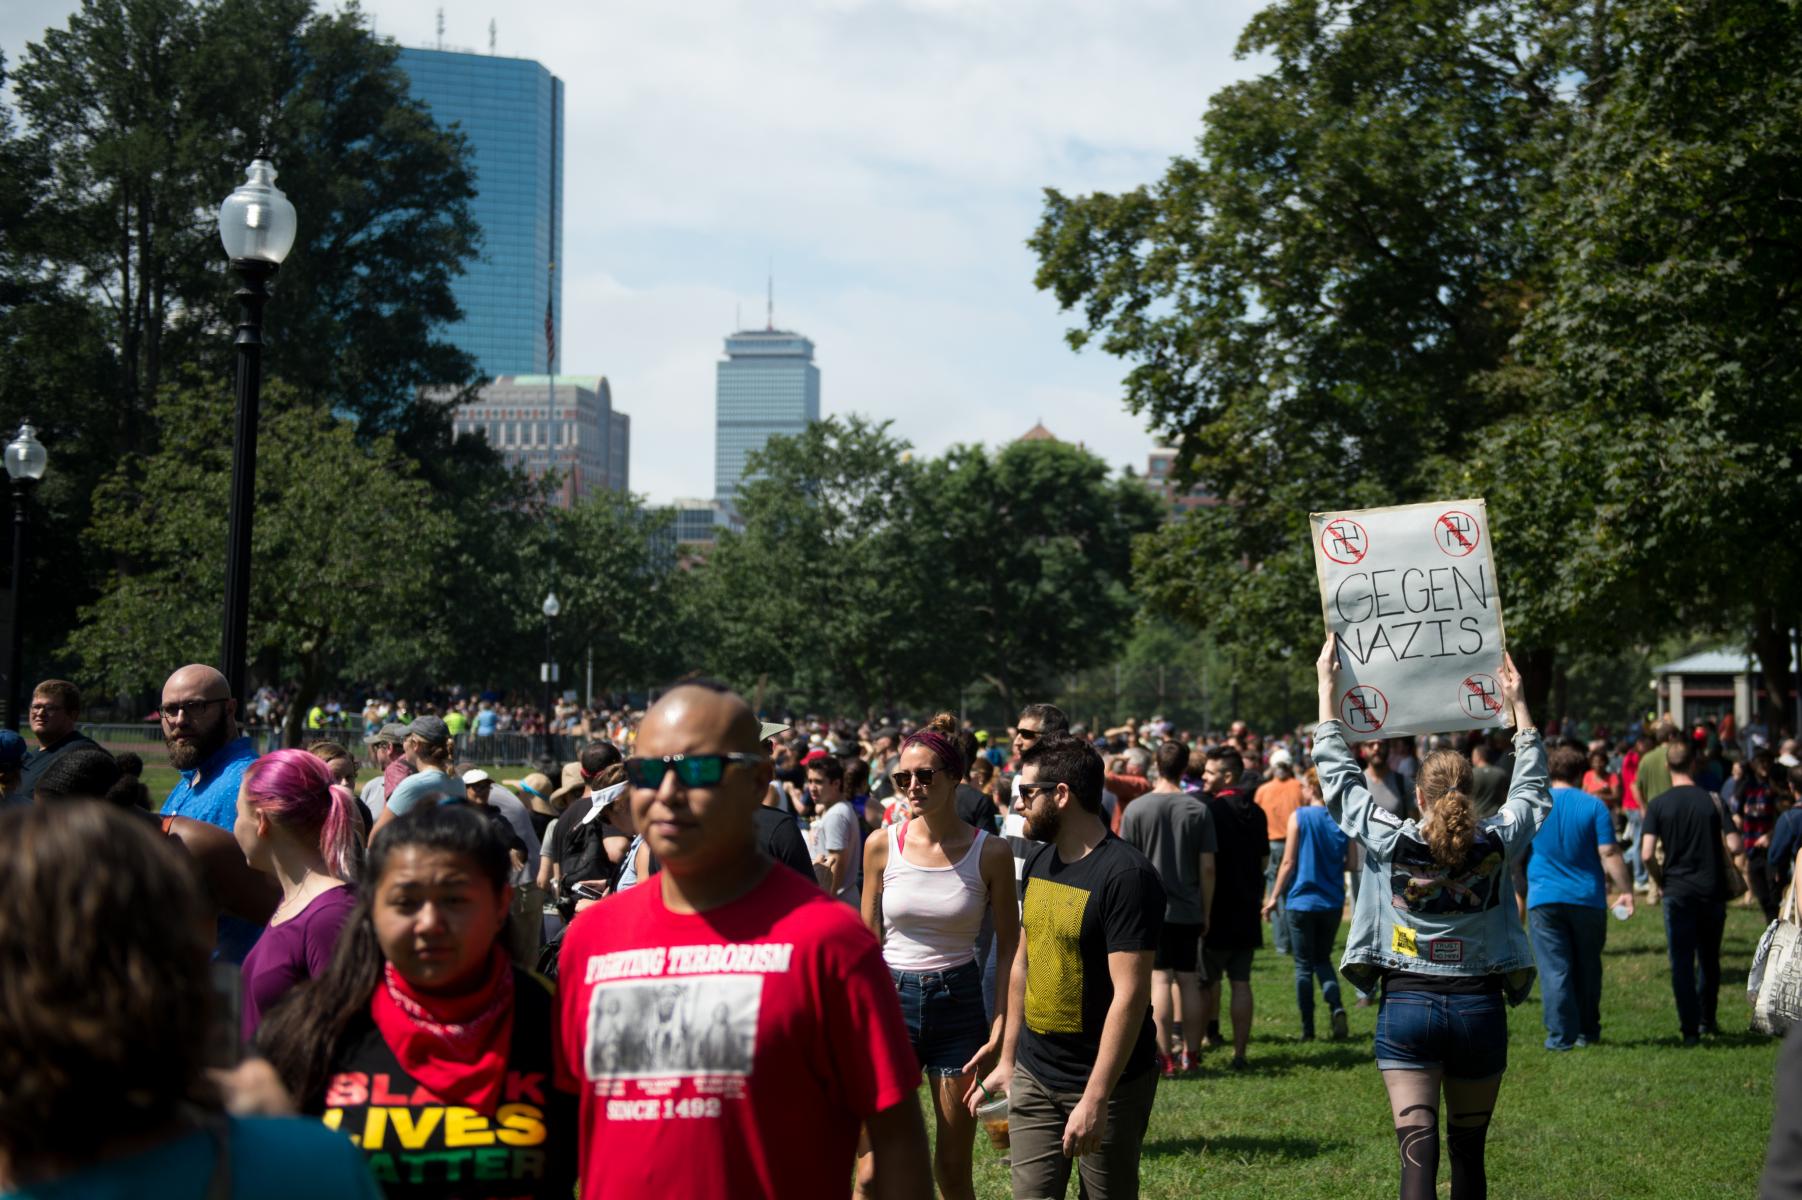 Boston, MA - August 19, 2017 - Anti-White Supremacy Rally